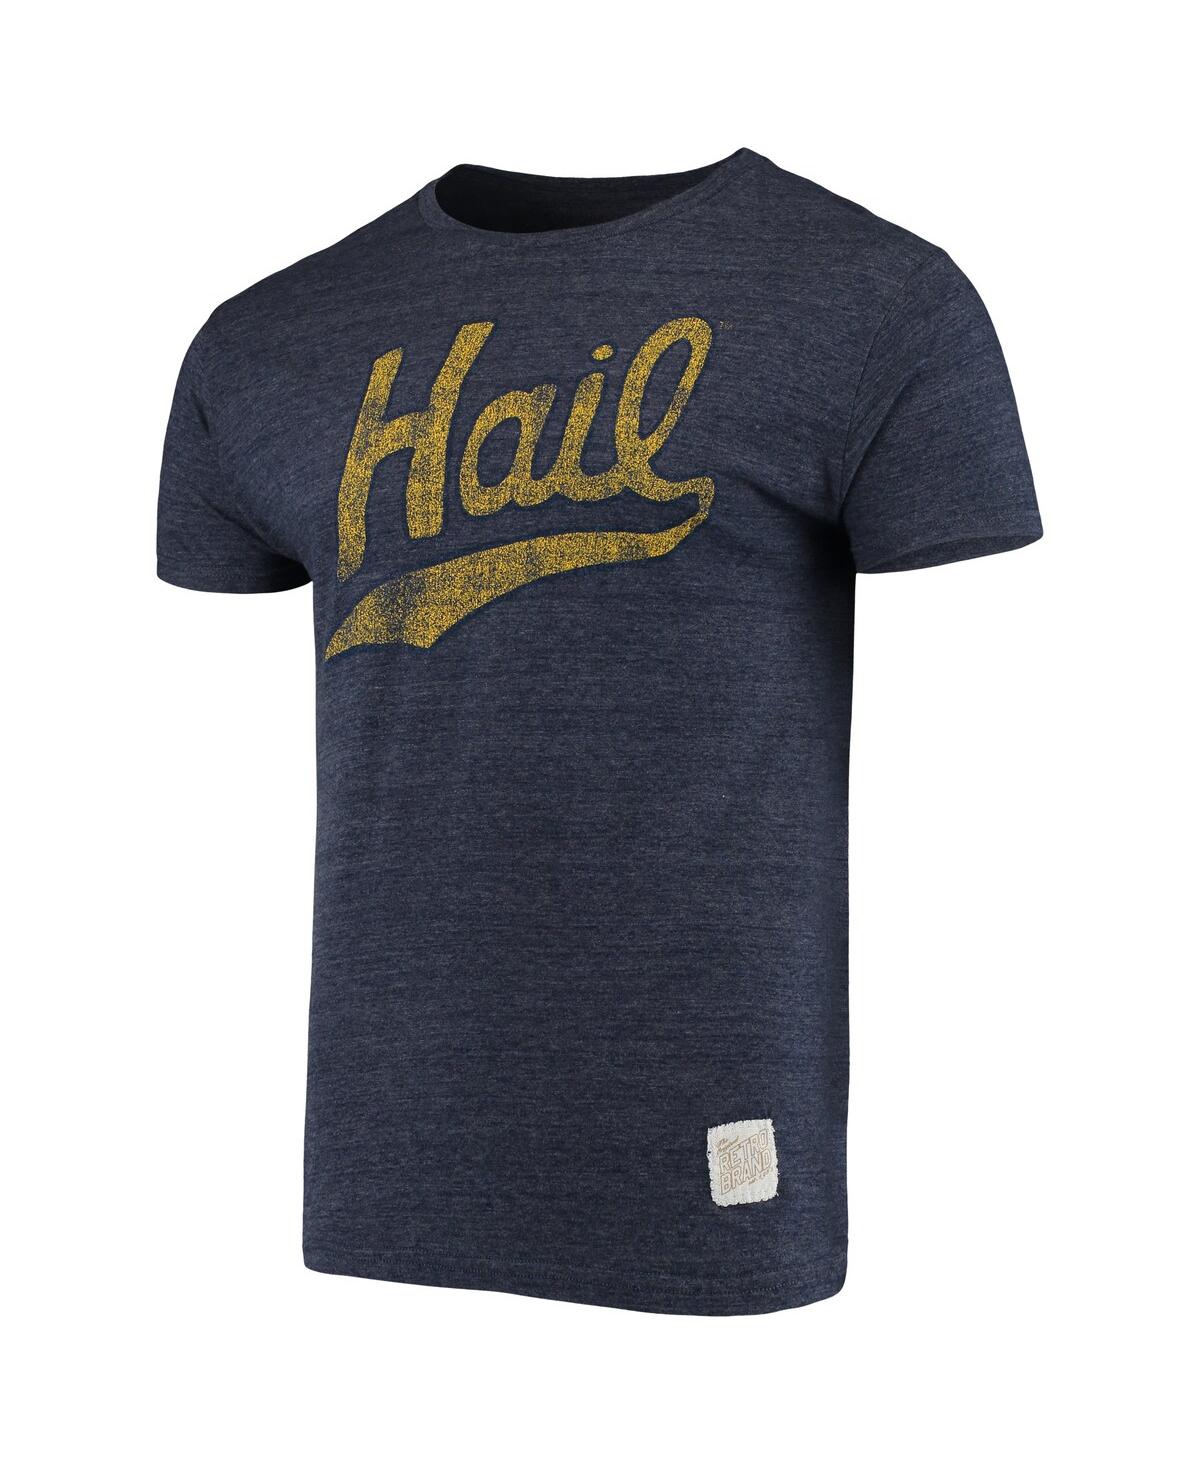 Shop Retro Brand Men's Original  Heathered Navy Michigan Wolverines Vintage-like Hail Tri-blend T-shirt